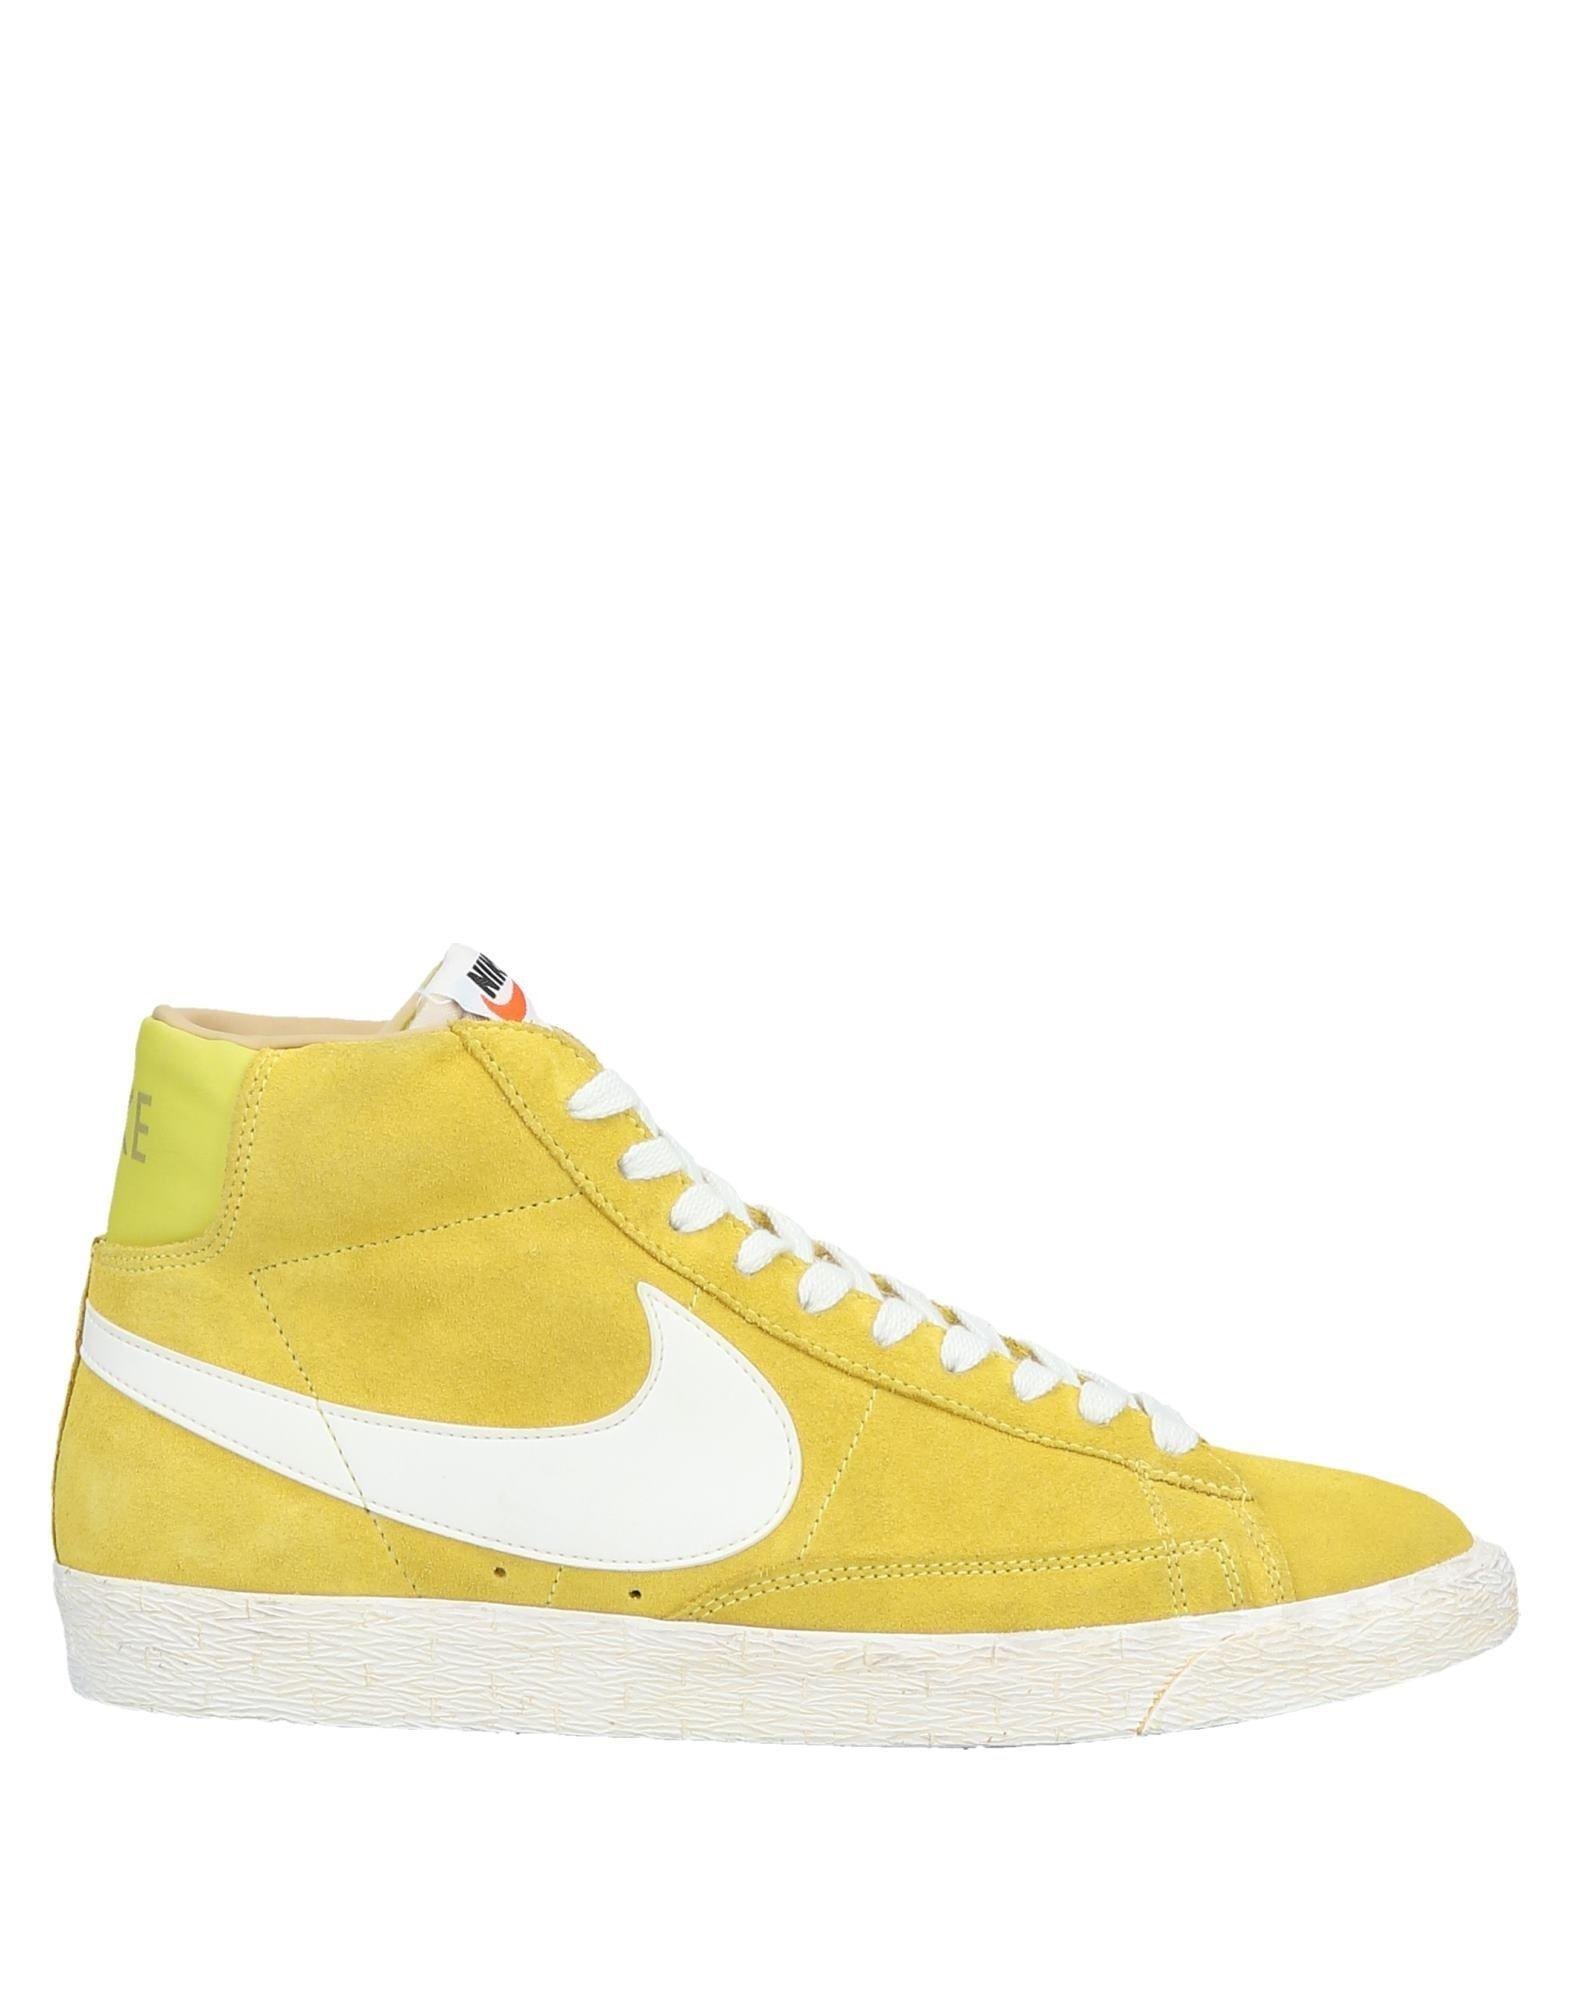 yellow high top nike shoes